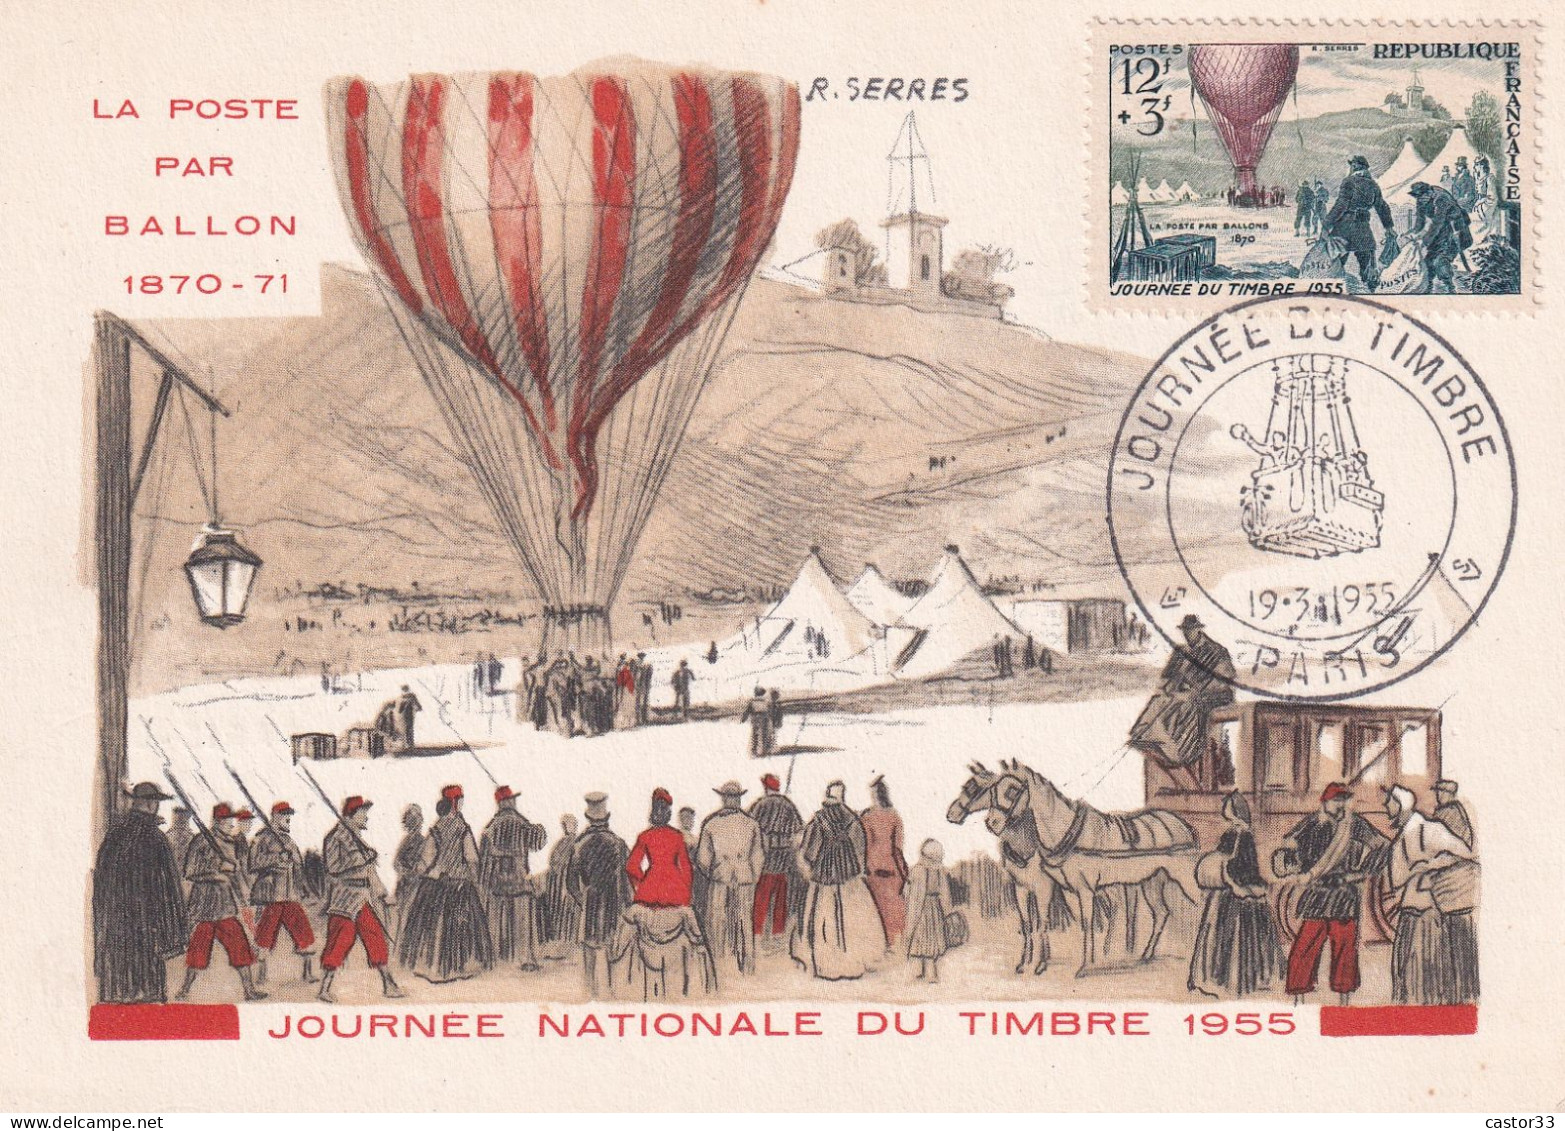 Journée Du Timbre 1955, La Poste Par Ballon 1870-71 - Giornata Del Francobollo